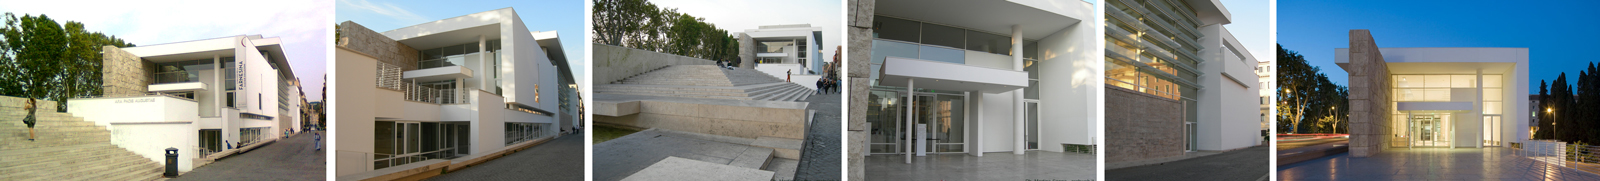 Museo dell'Ara Pacis a Roma - Richard Meier